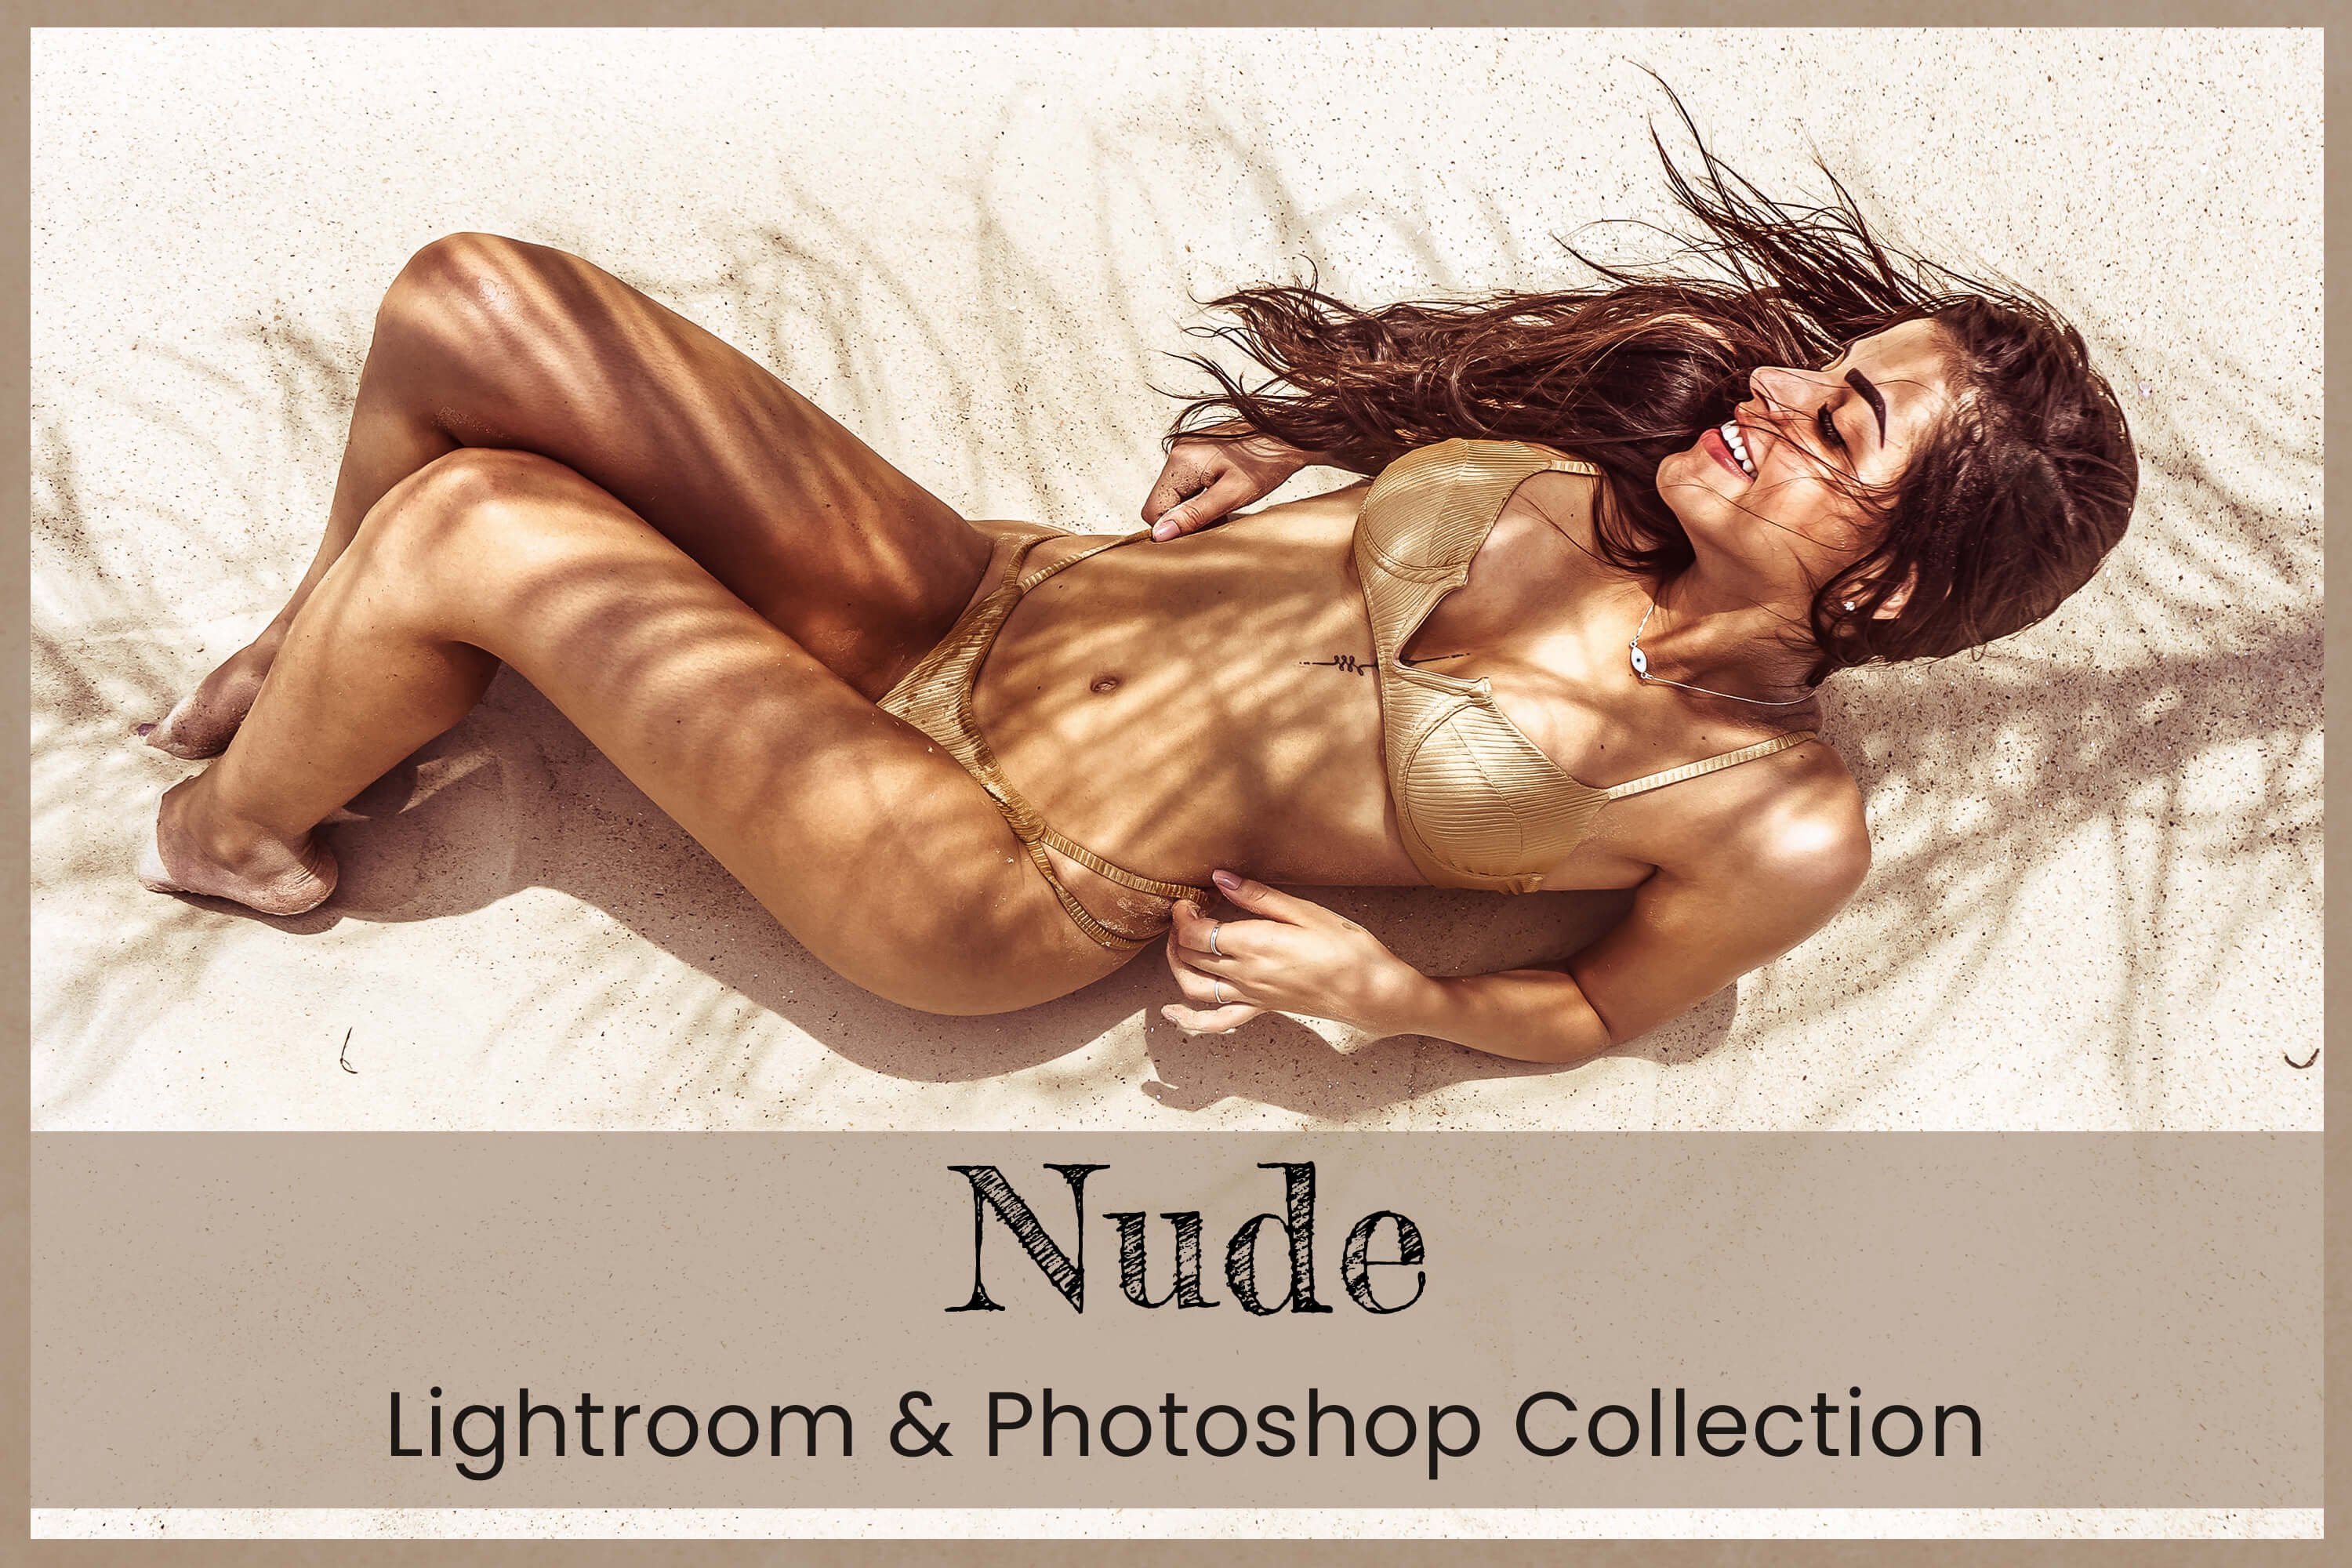 Photoshop nudity